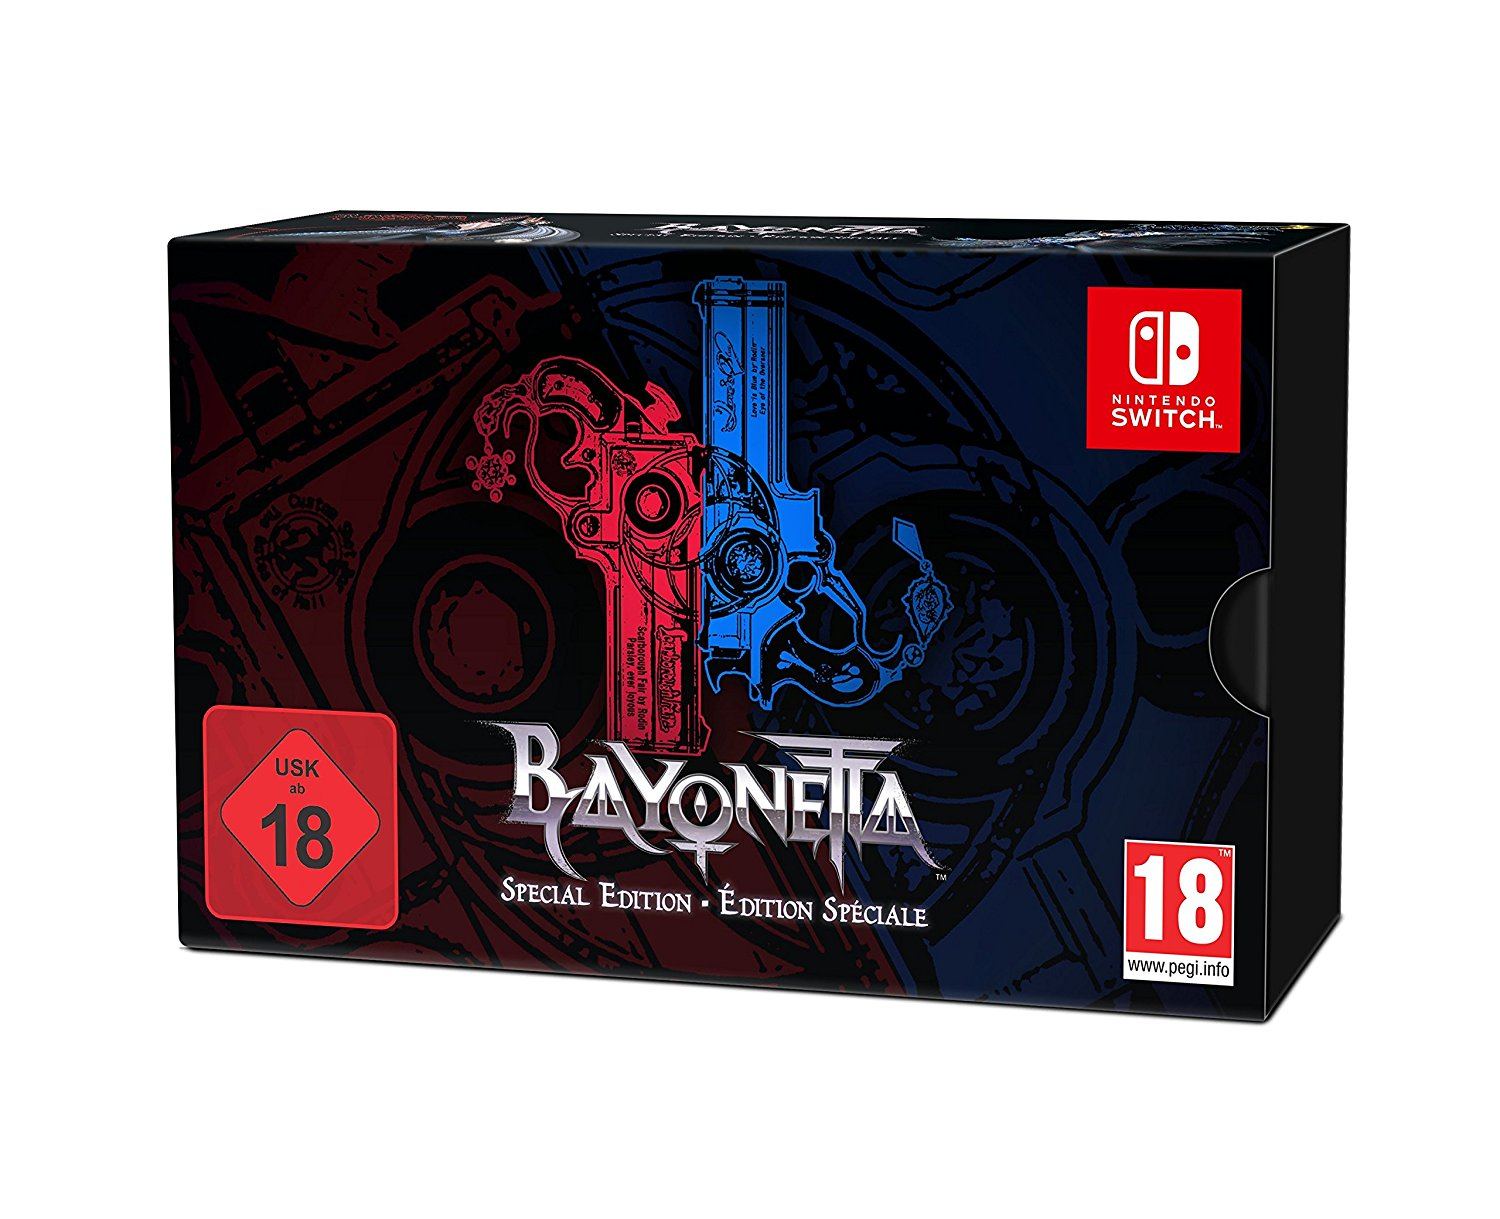 Bayonetta™ 2 for Nintendo Switch - Nintendo Official Site